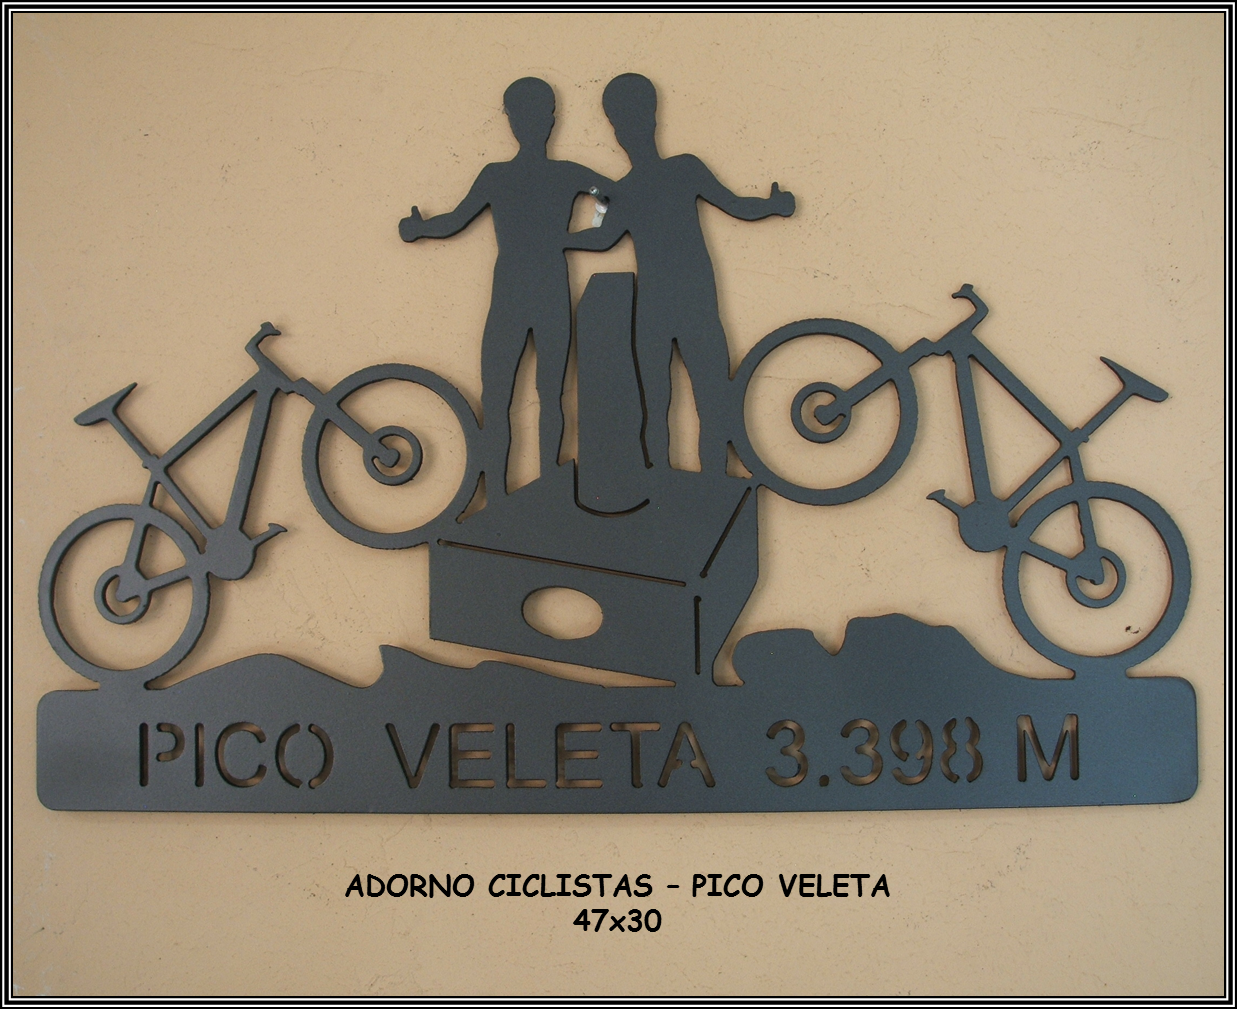 Adorno Ciclistas Pico Veleta METAL CNC - 47x30